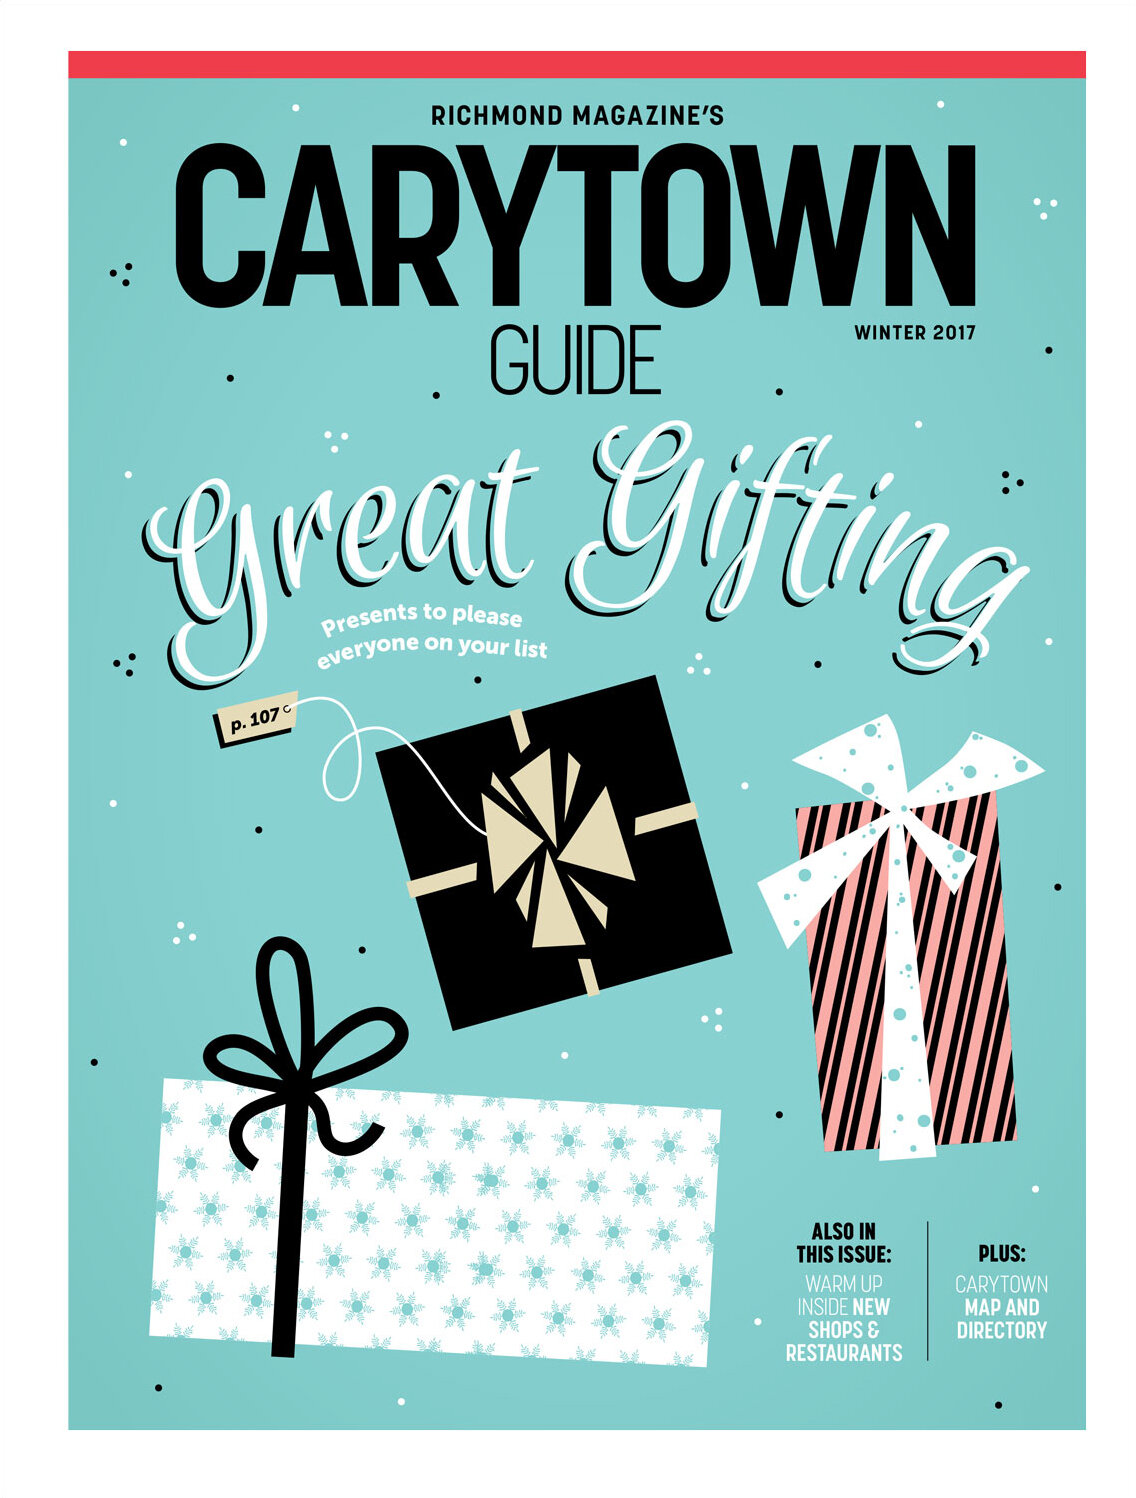 Carytown-gift-guide-editorial-design-1.jpg